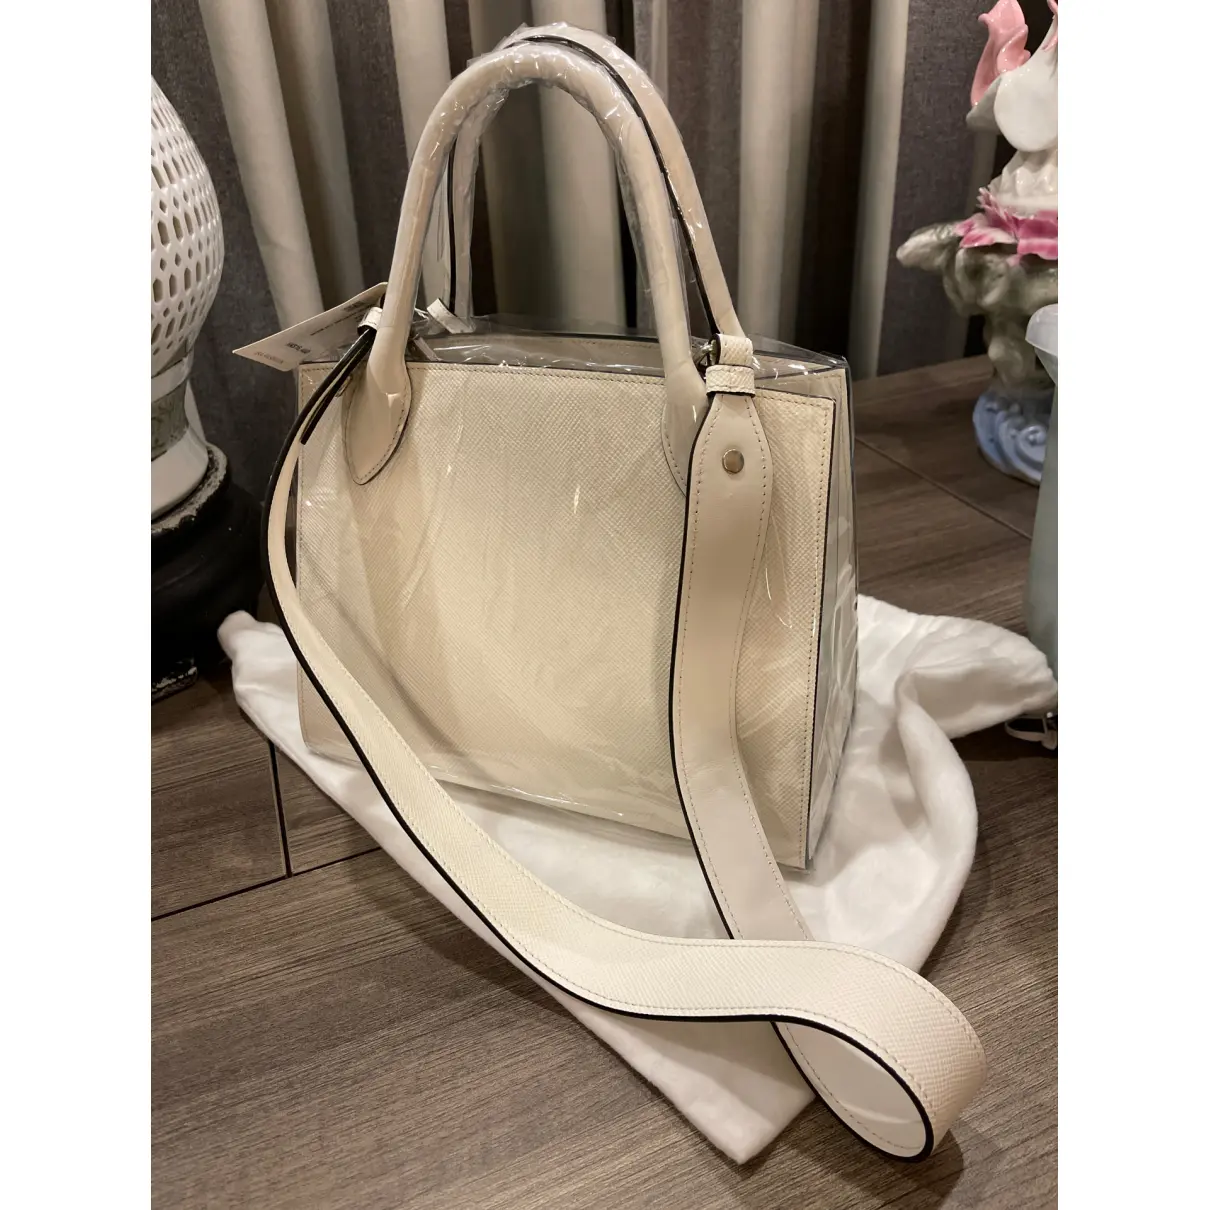 Monochrome leather handbag Prada